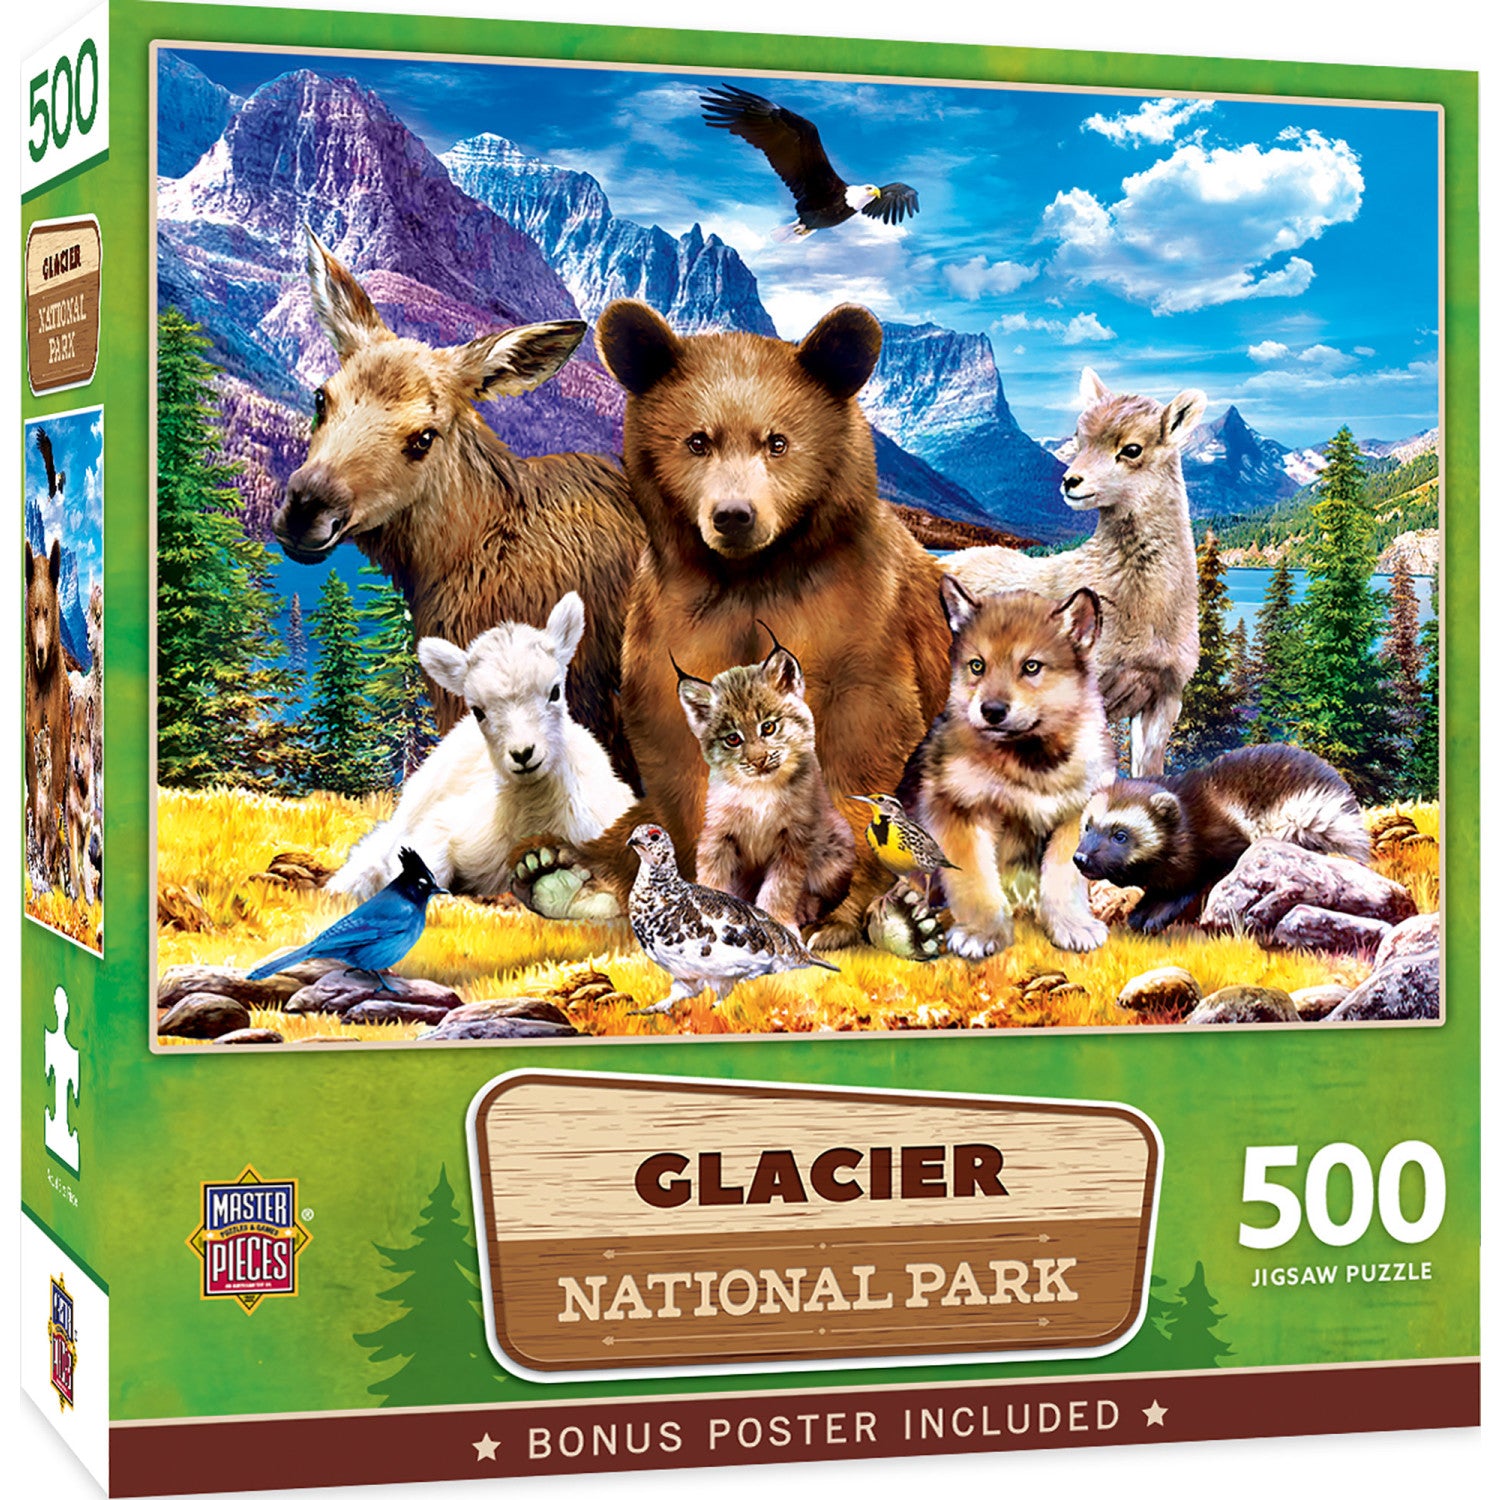 Glacier National Park 500 Piece Jigsaw Puzzle